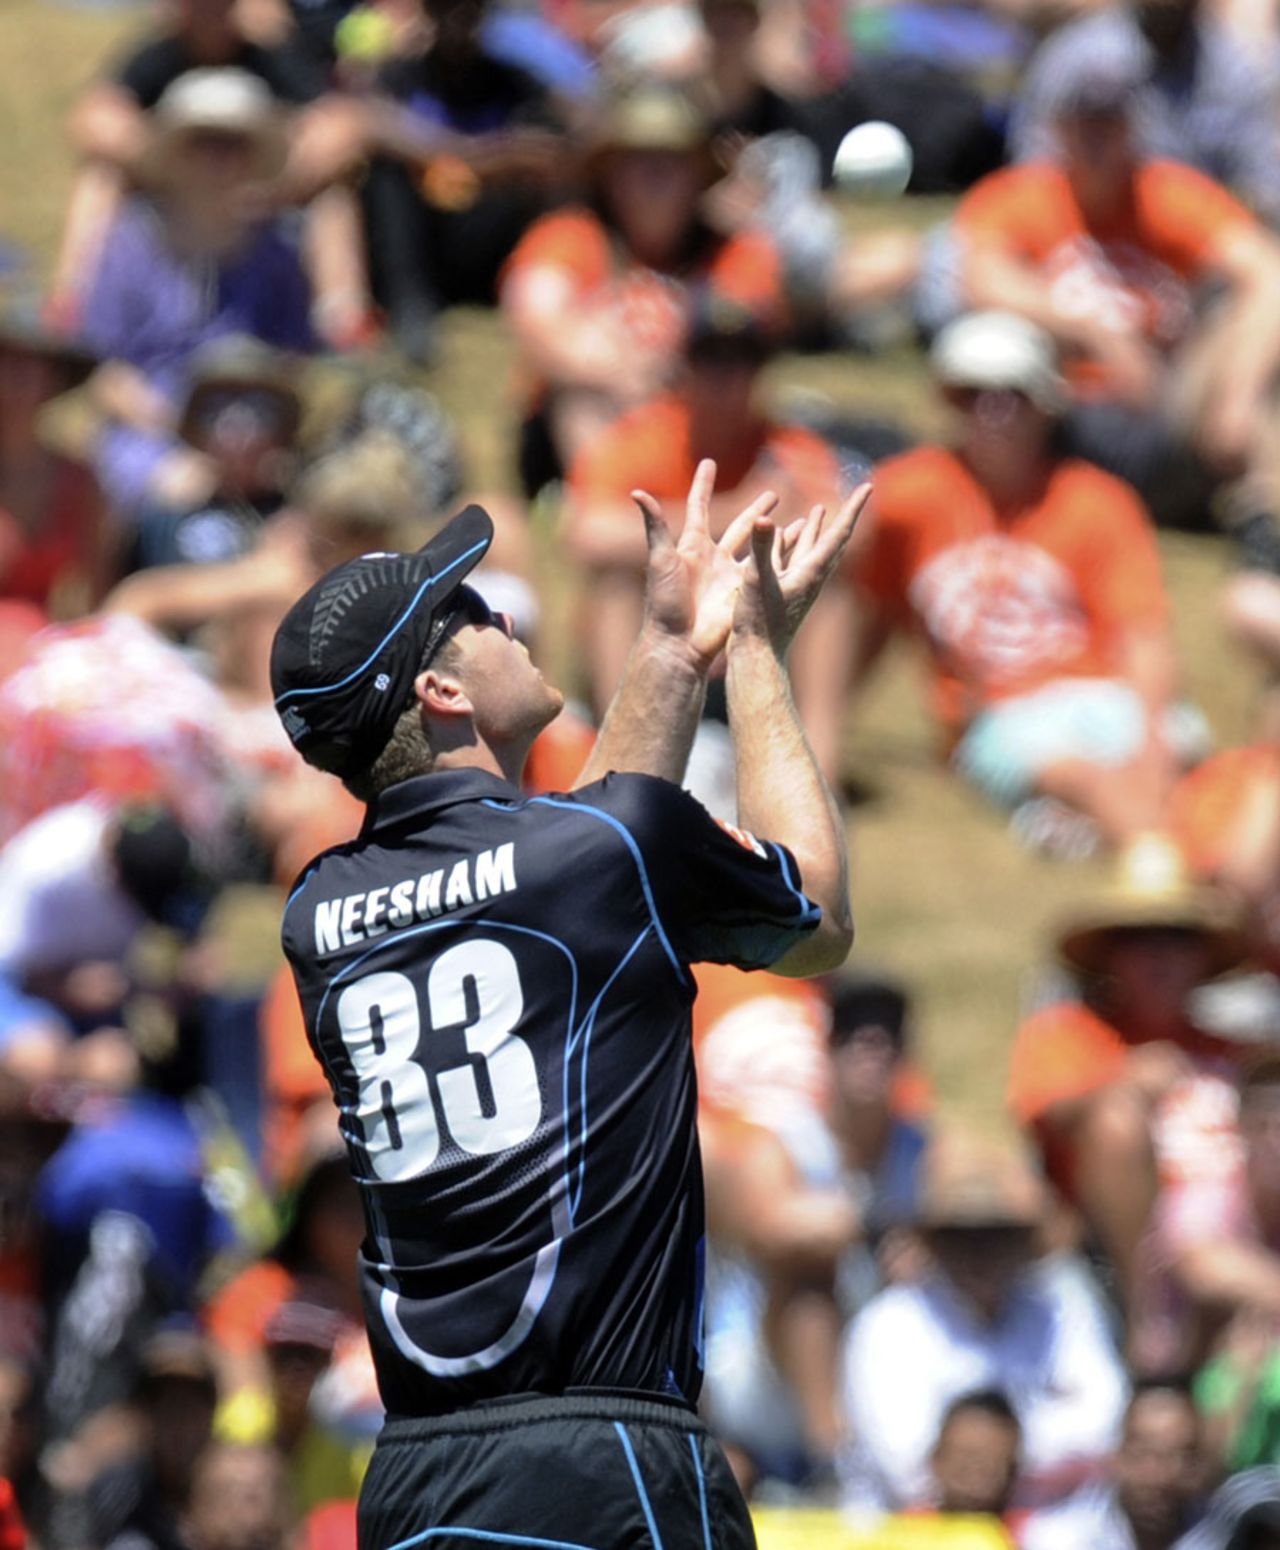 James Neesham takes the catch to dismiss Virat Kohli, New Zealand v India, 4th ODI, Hamilton, January 28, 2014